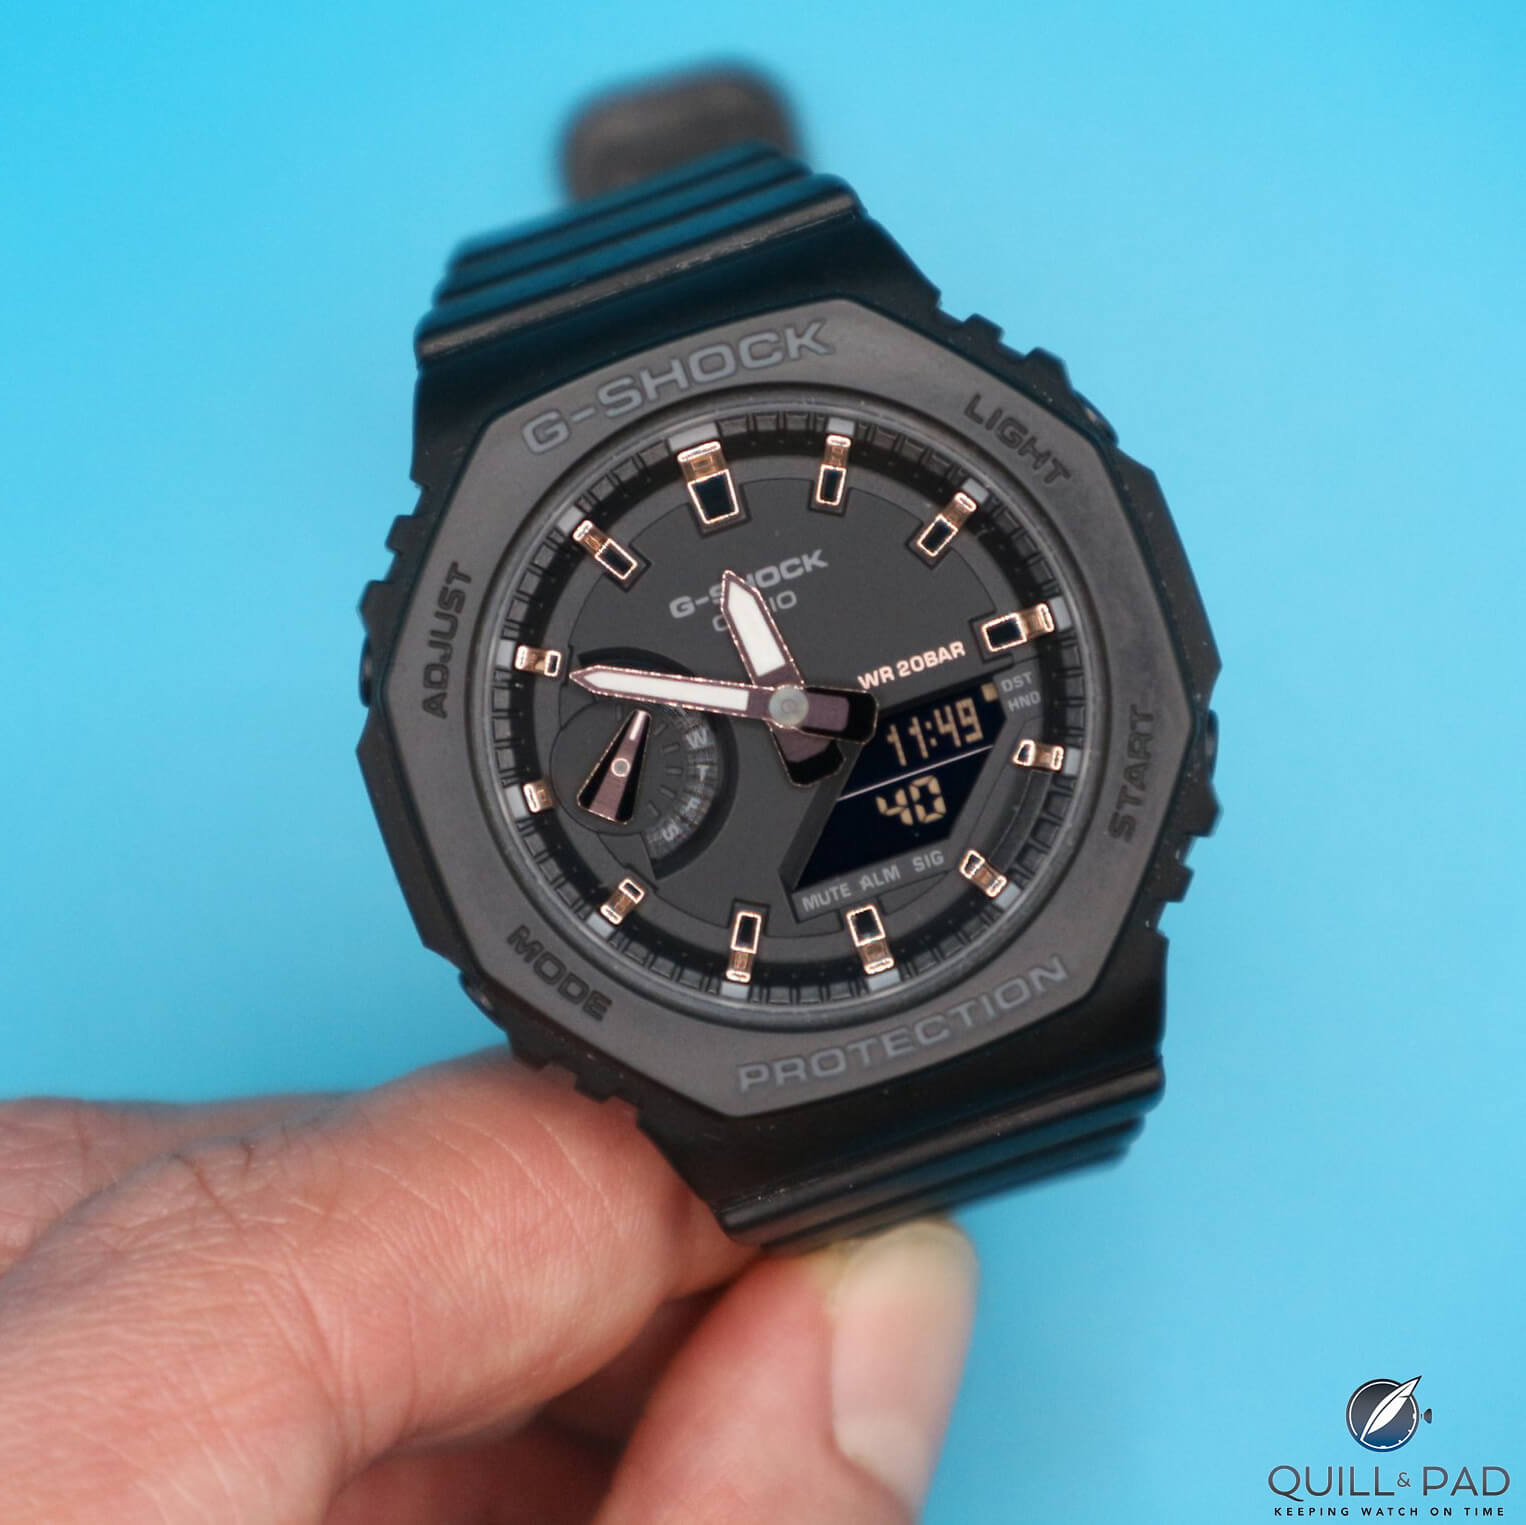 Casio adds solar charging to a fan-favorite G-Shock watch